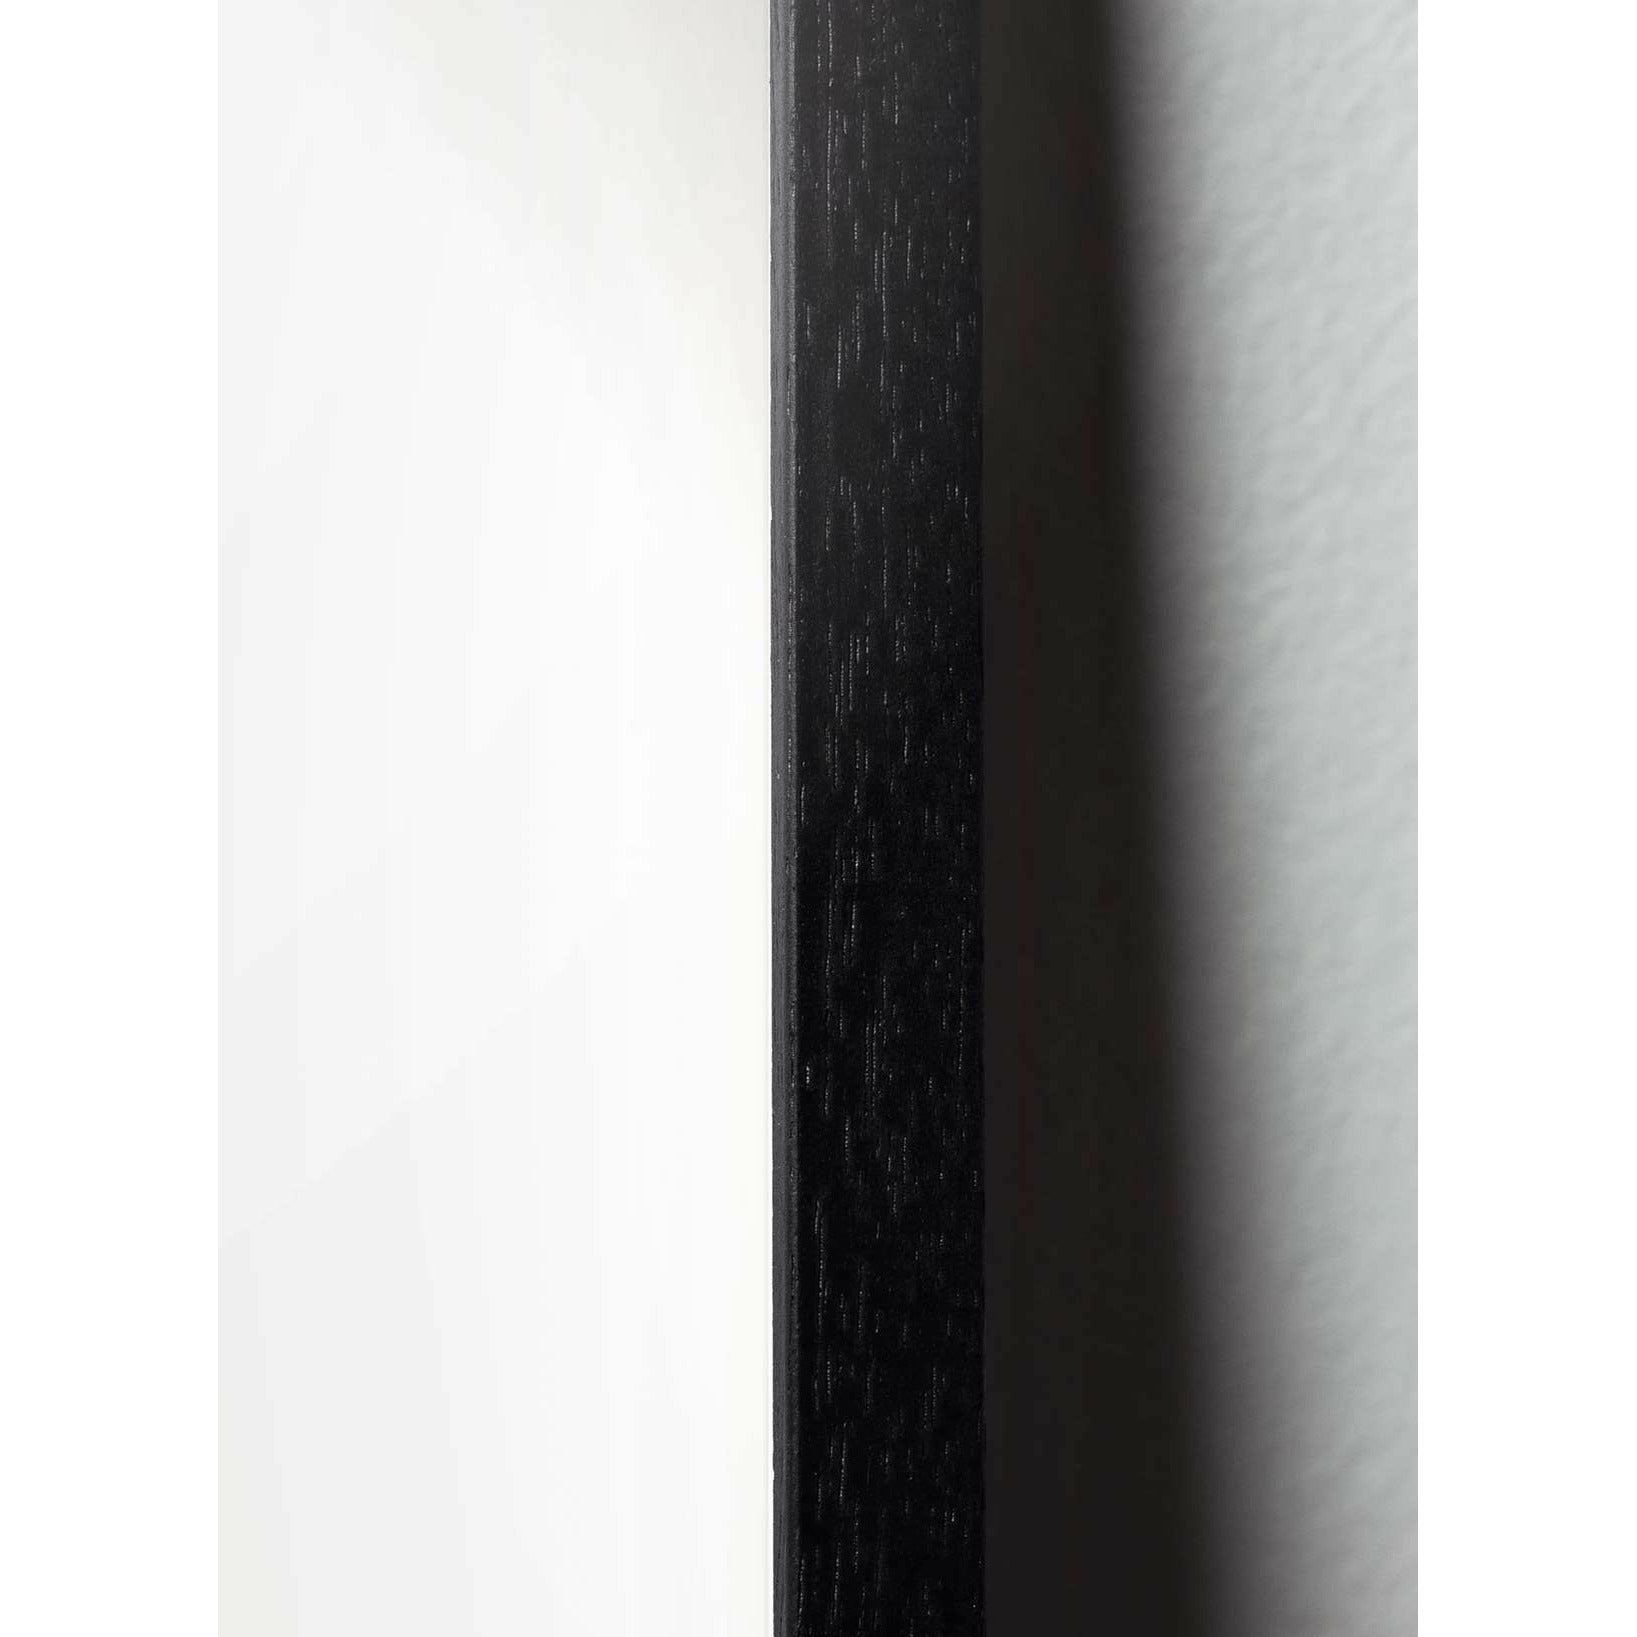 Brainchild Släpp klassisk affisch, ram i svart -målat trä 70x100 cm, sandfärgad bakgrund